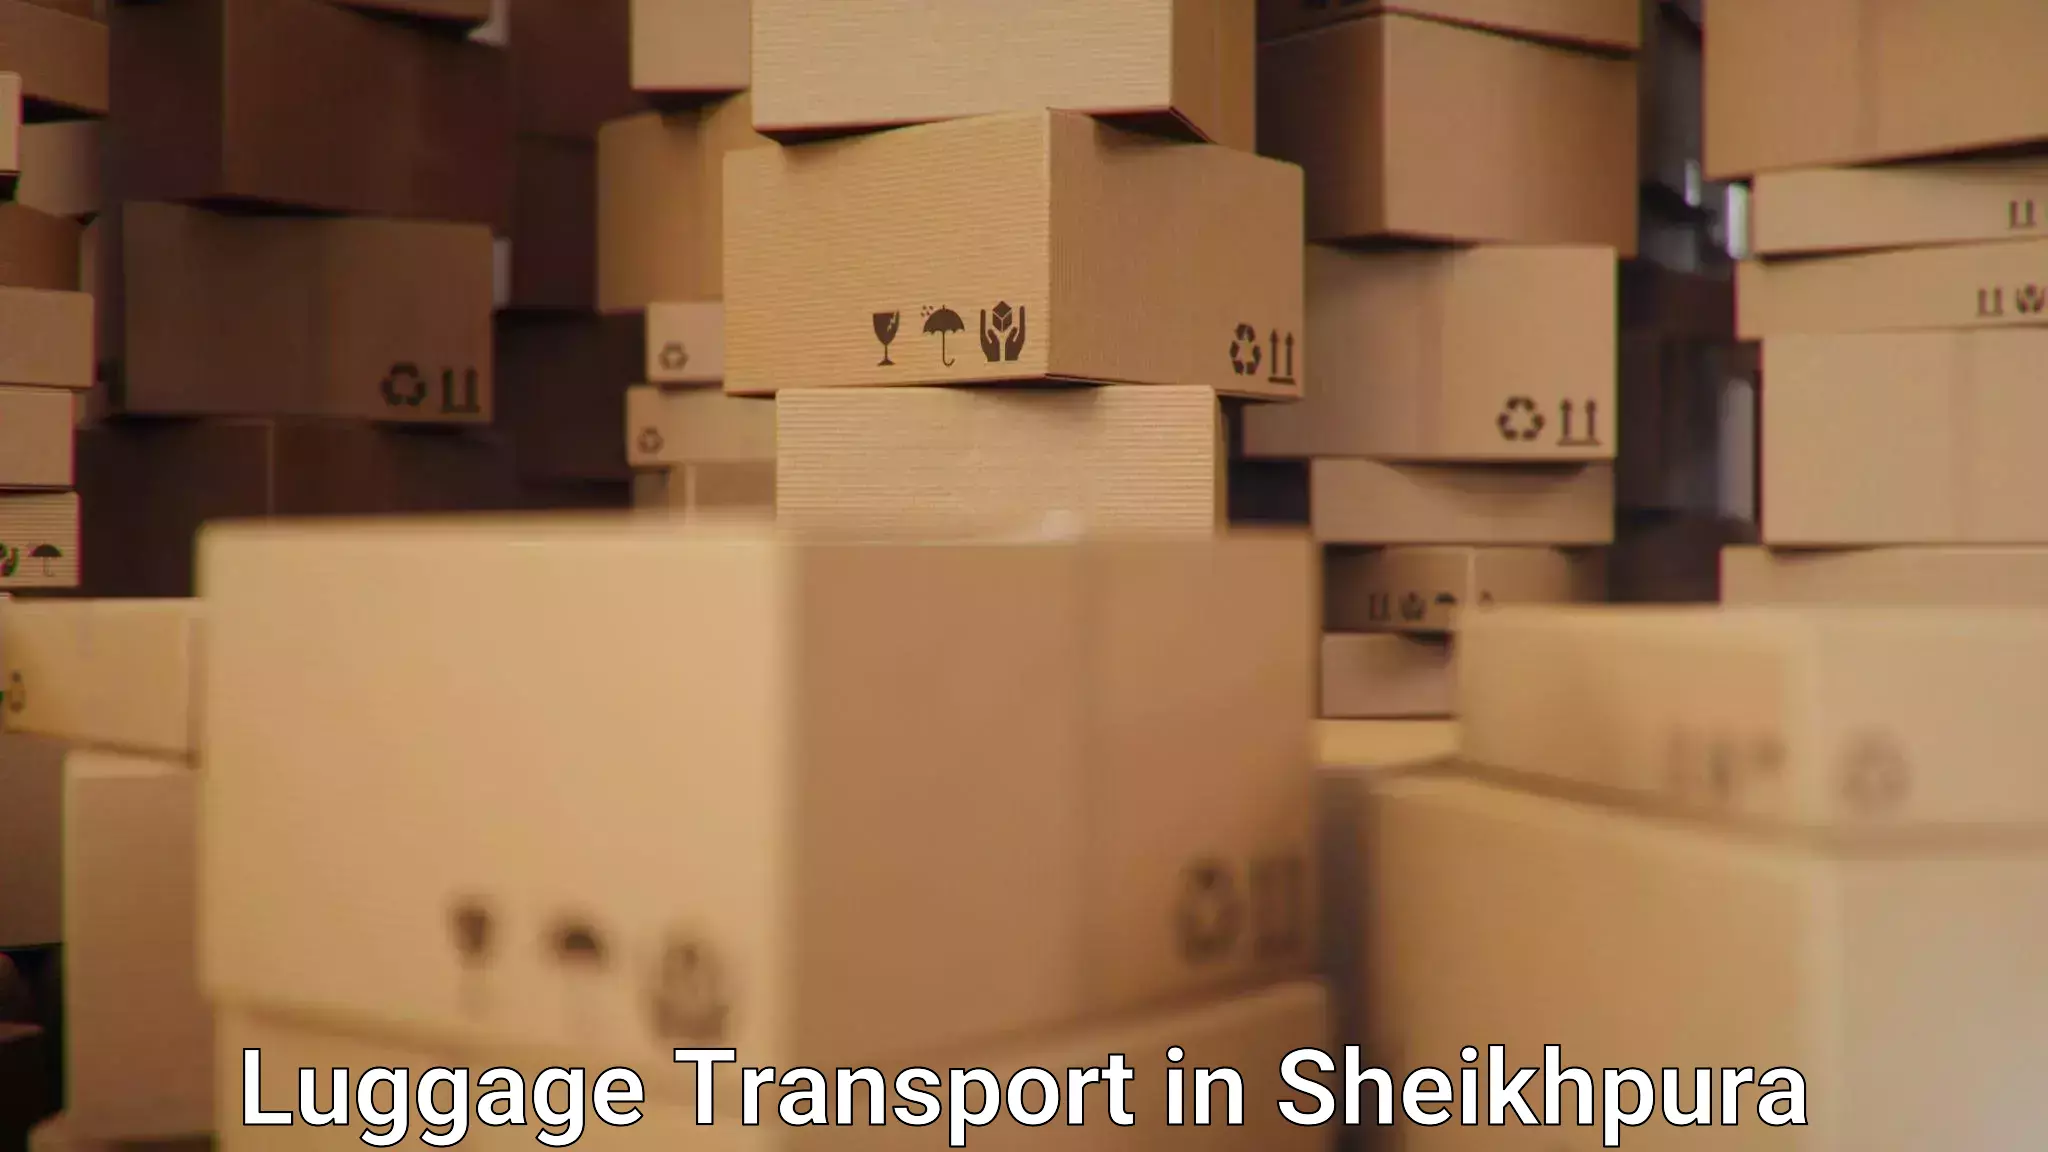 Luggage shipping estimate in Sheikhpura